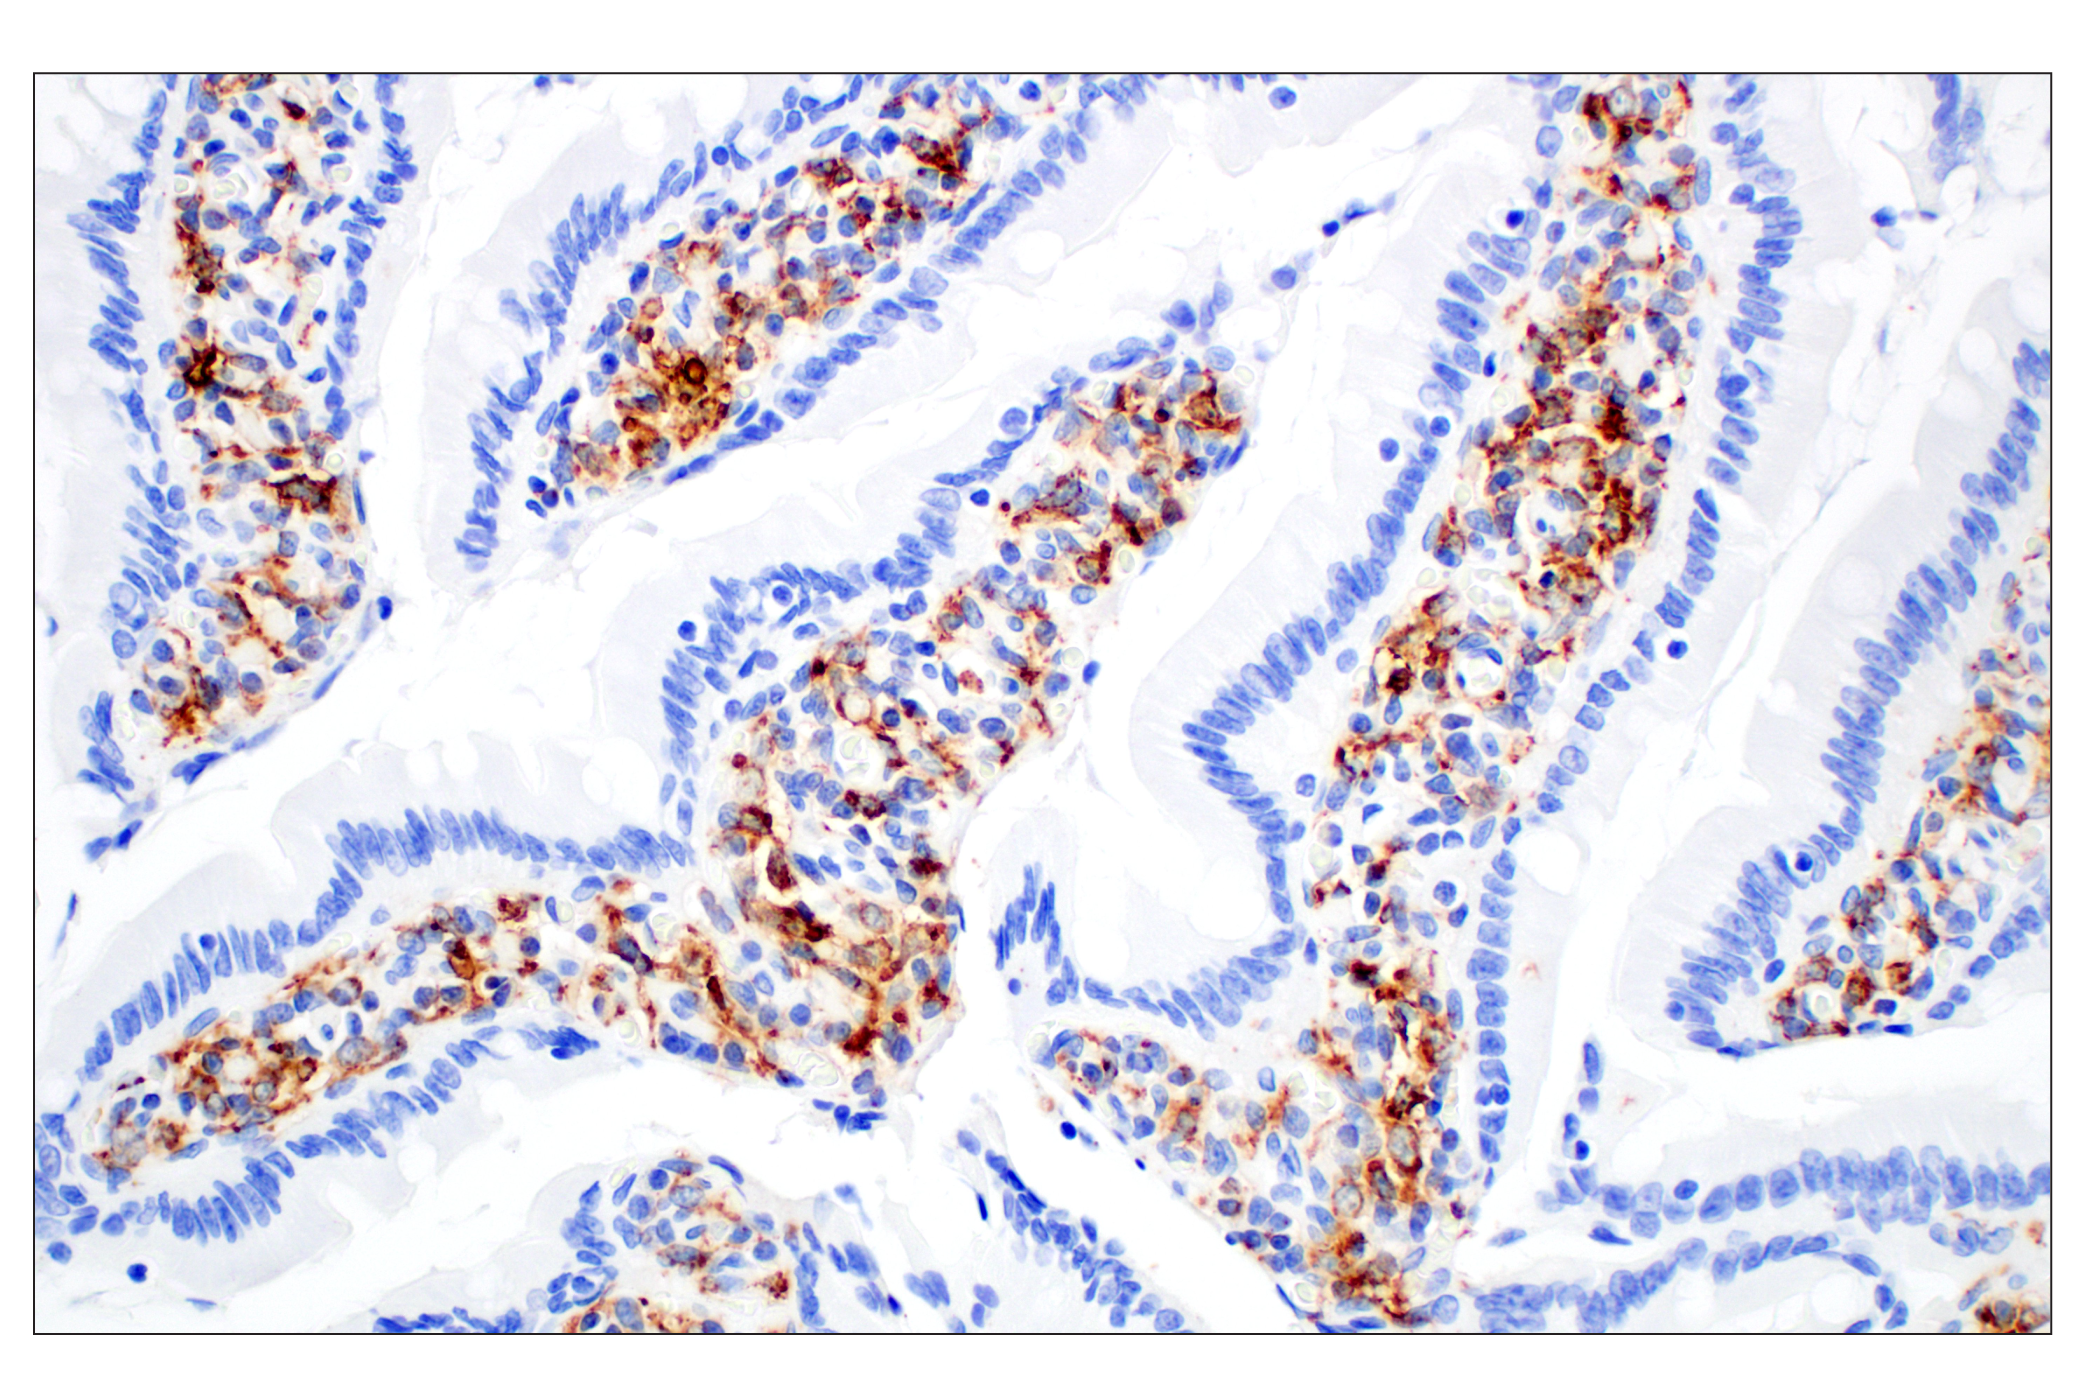  Image 71: Mouse Reactive M1 vs M2 Macrophage IHC Antibody Sampler Kit